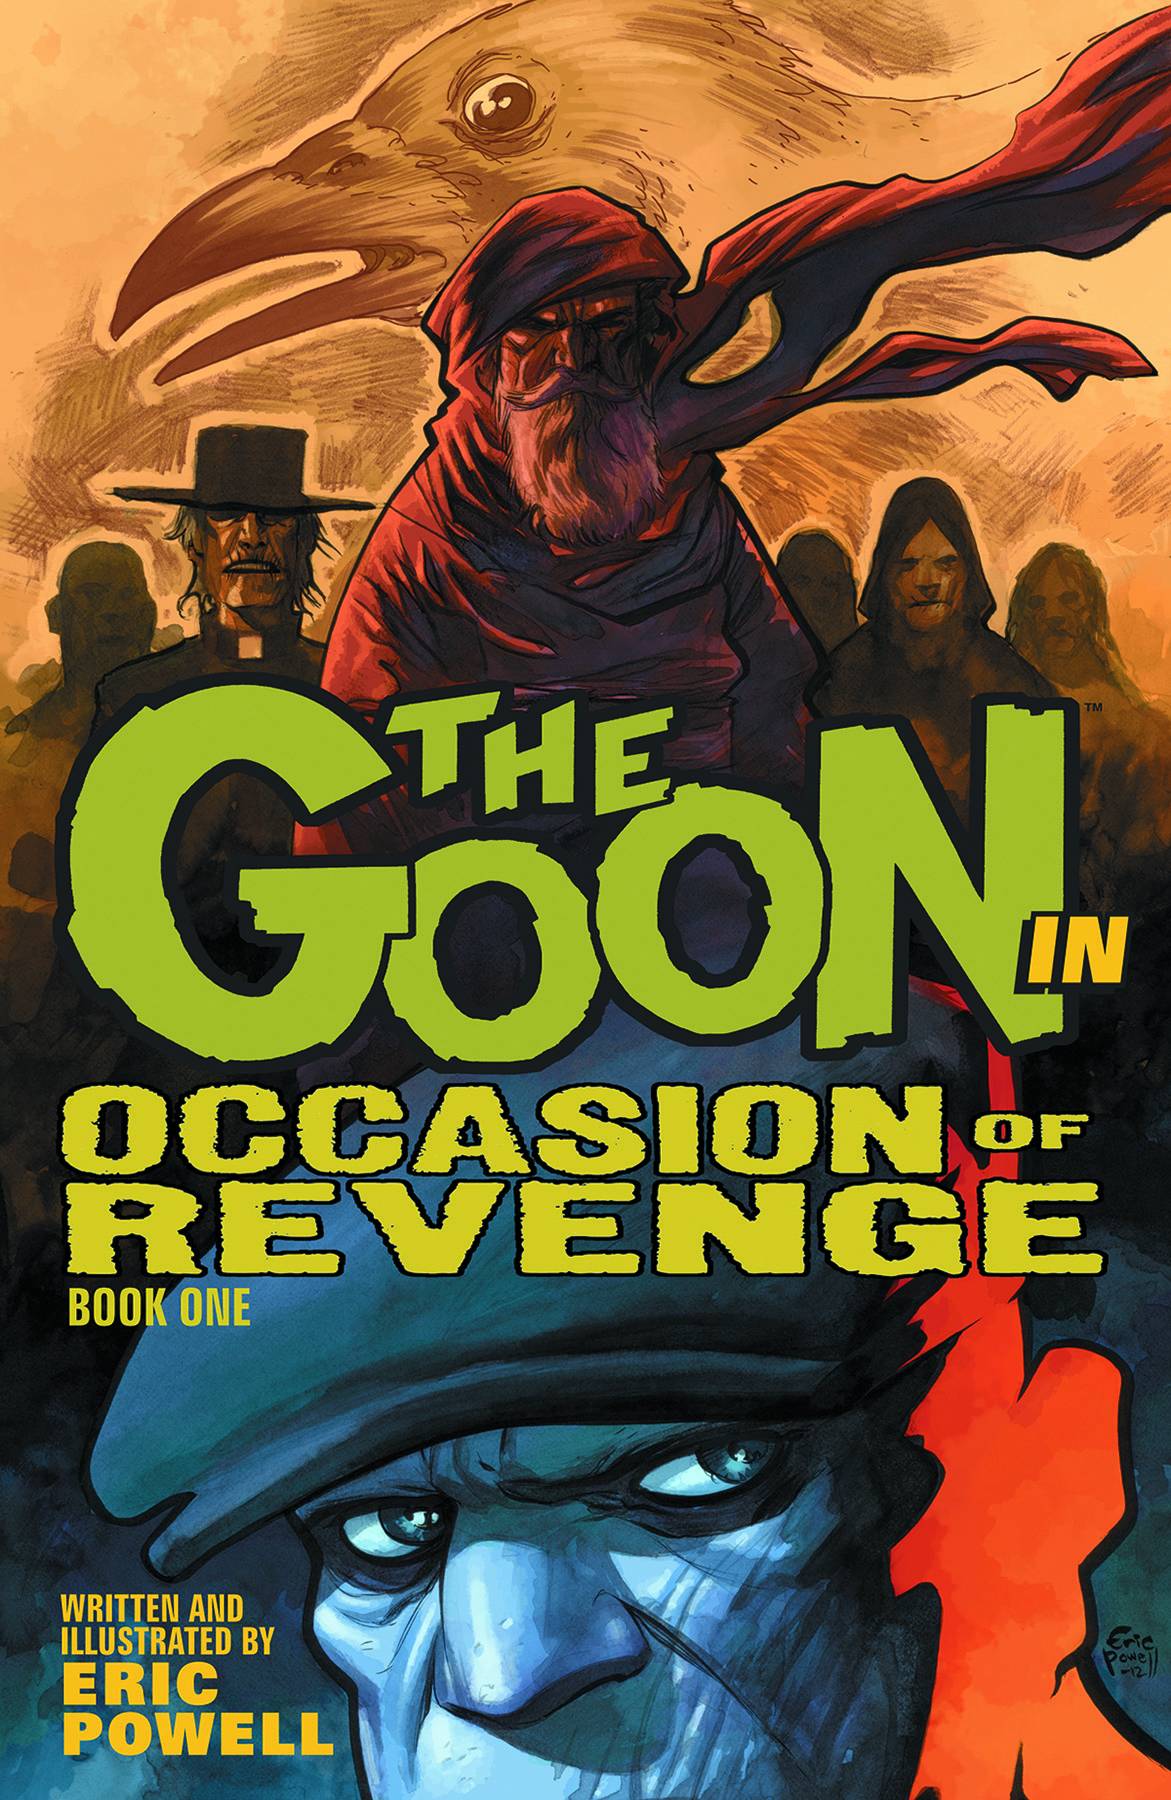 The Goon Vol 14 Occasion Of Revenge Fresh Comics